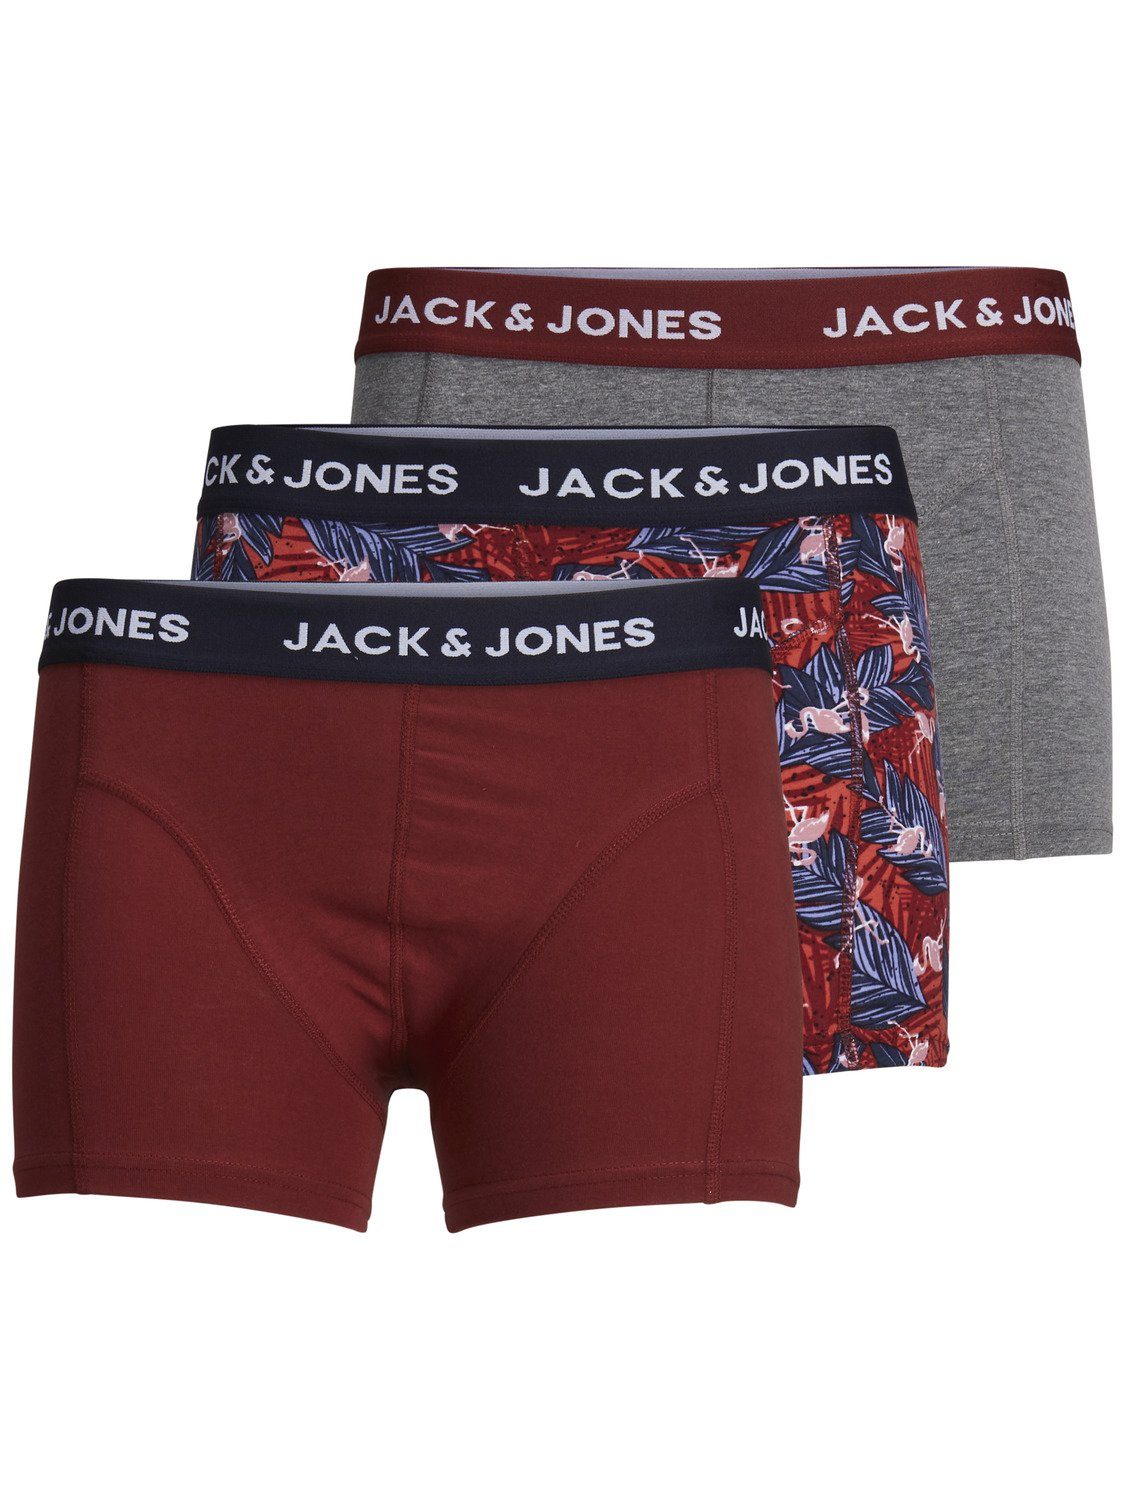 Boxershorts & Jones Jack